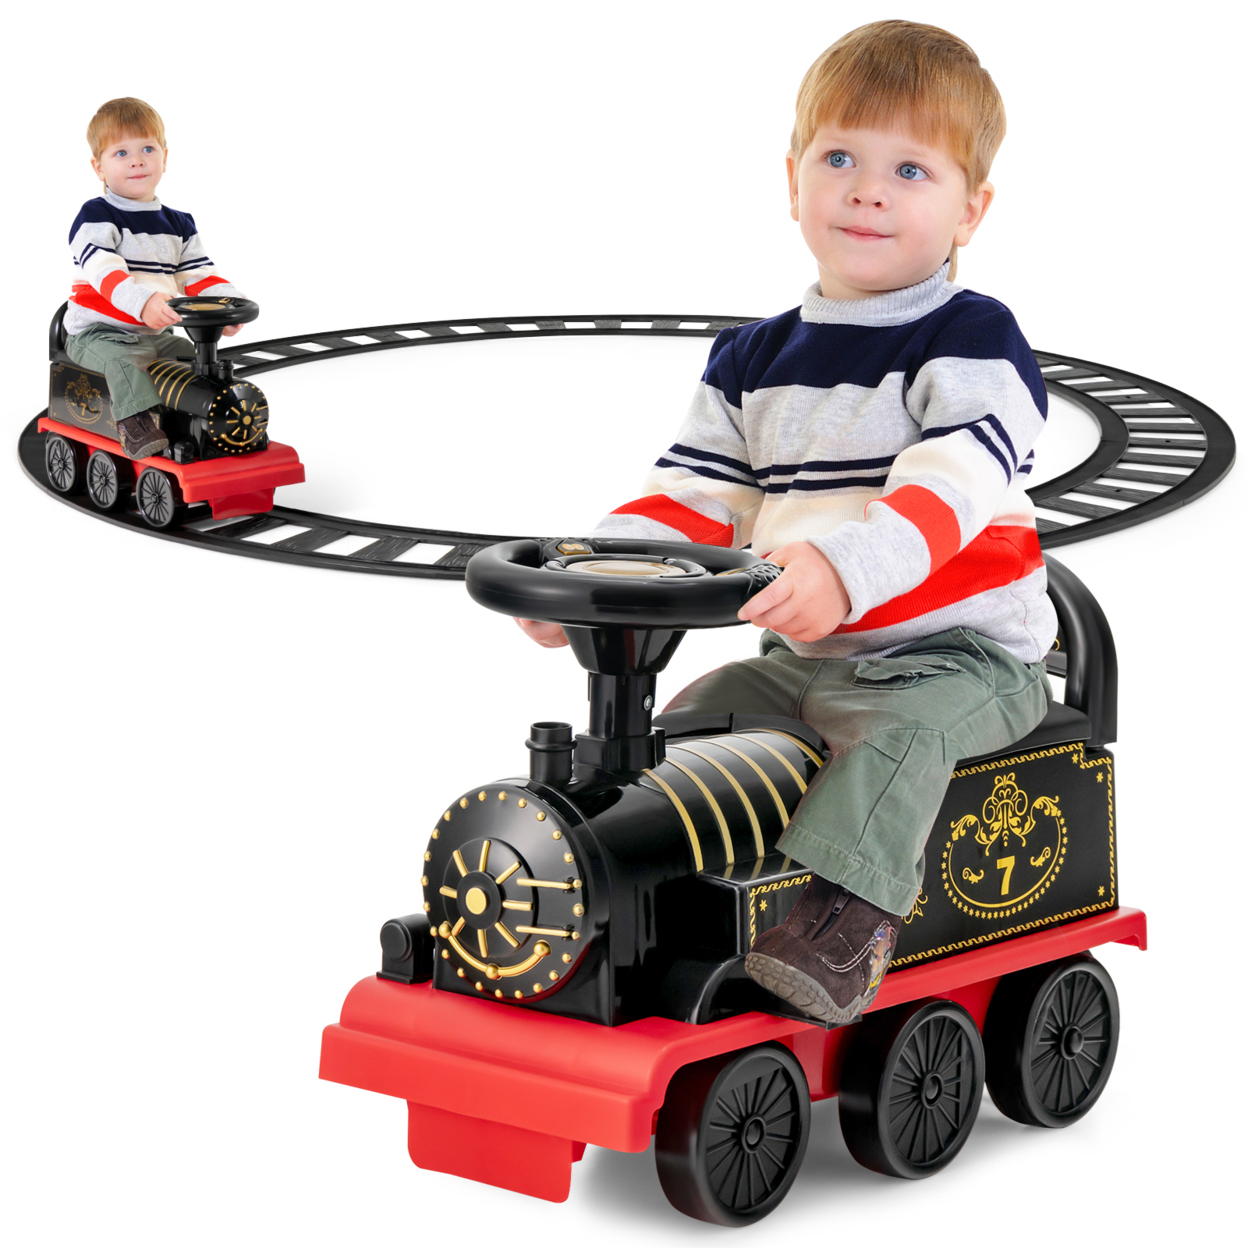 6V Electric Kids Ride On Train Motorized Train Toy W/ Track & 6 Wheels - Blue